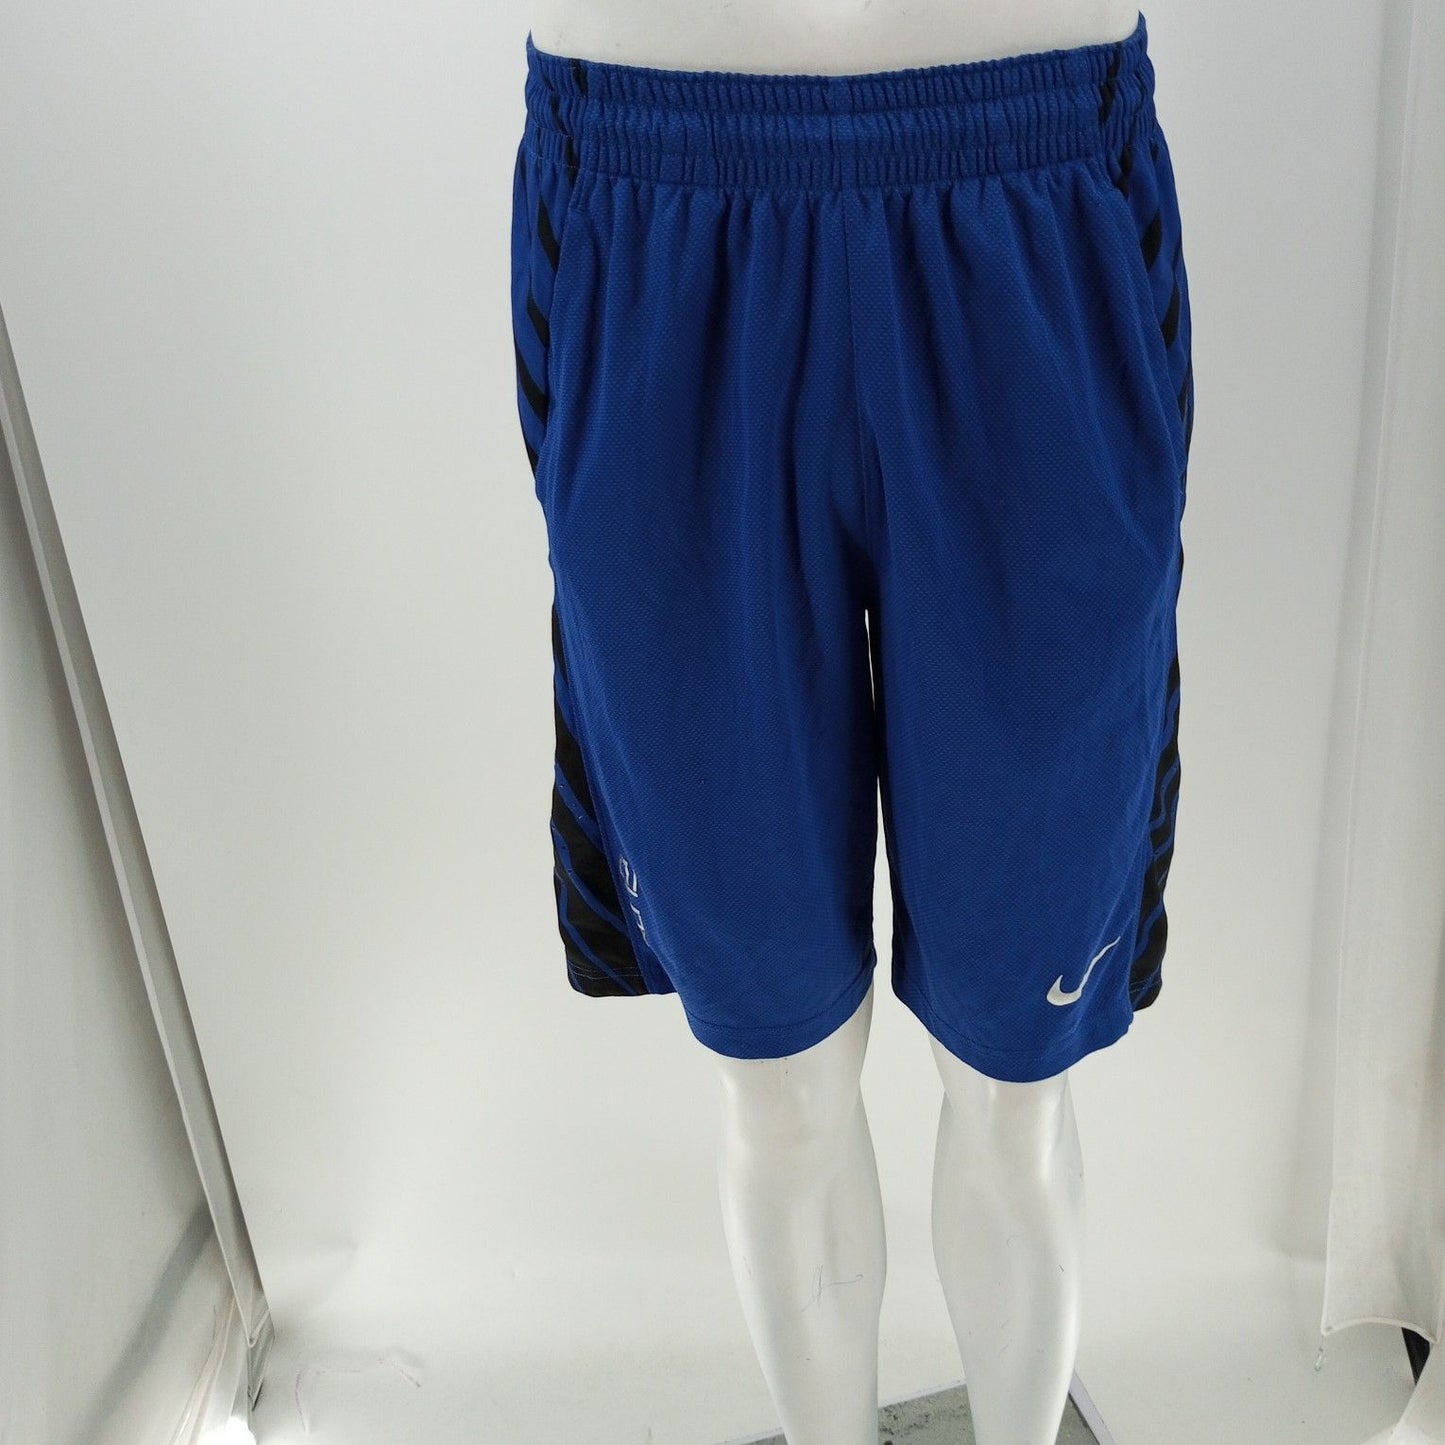 Jordan Nike Adidas Champion Reebok Athletic Mens Shorts 30 item box